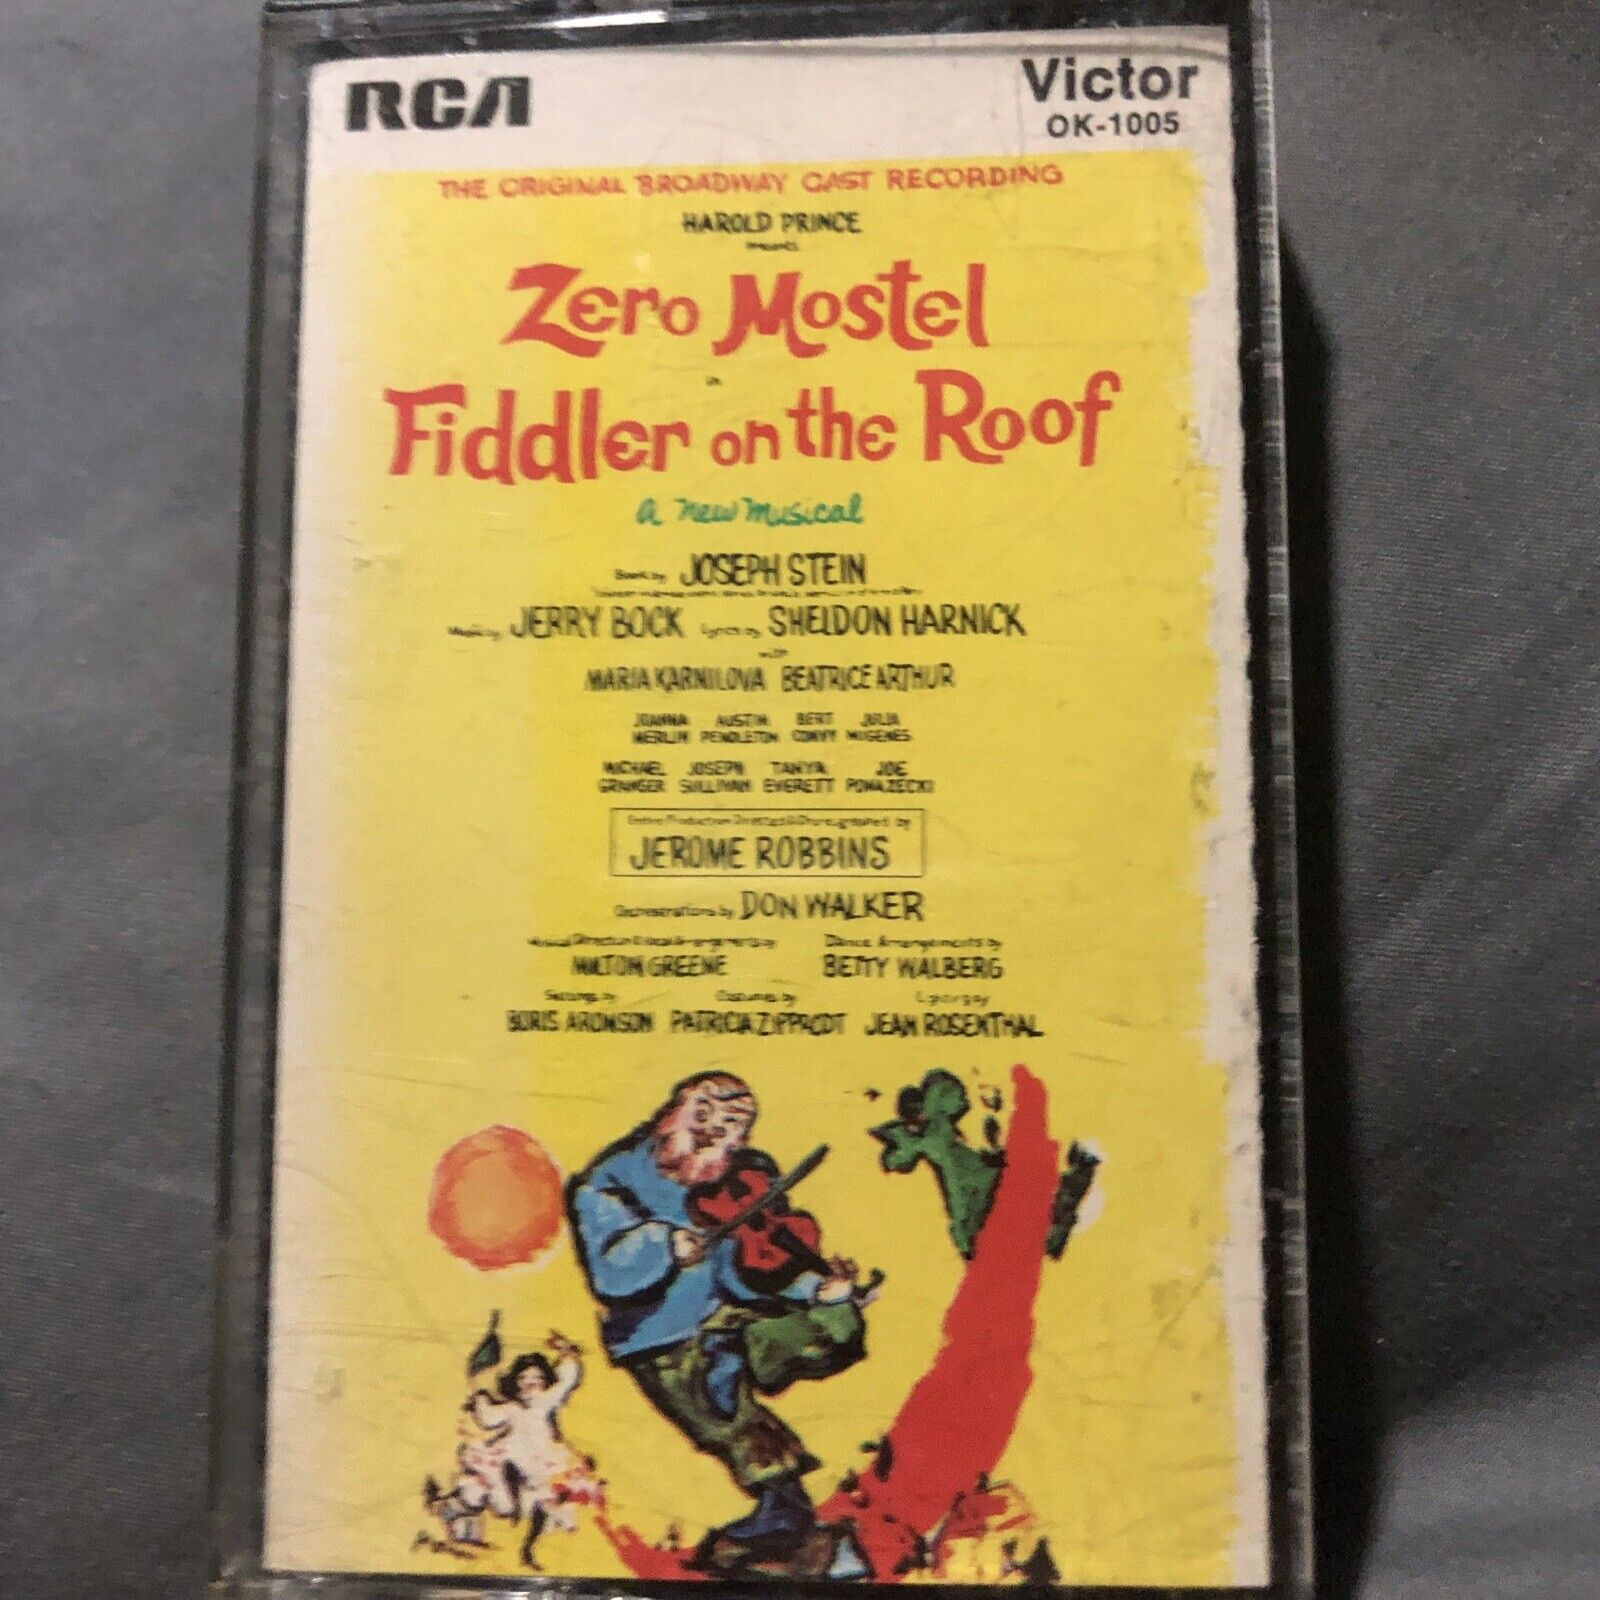 Vtg Fiddler On The Roof Original Broadway Cast Recording 1964 RCA Cassette Tape